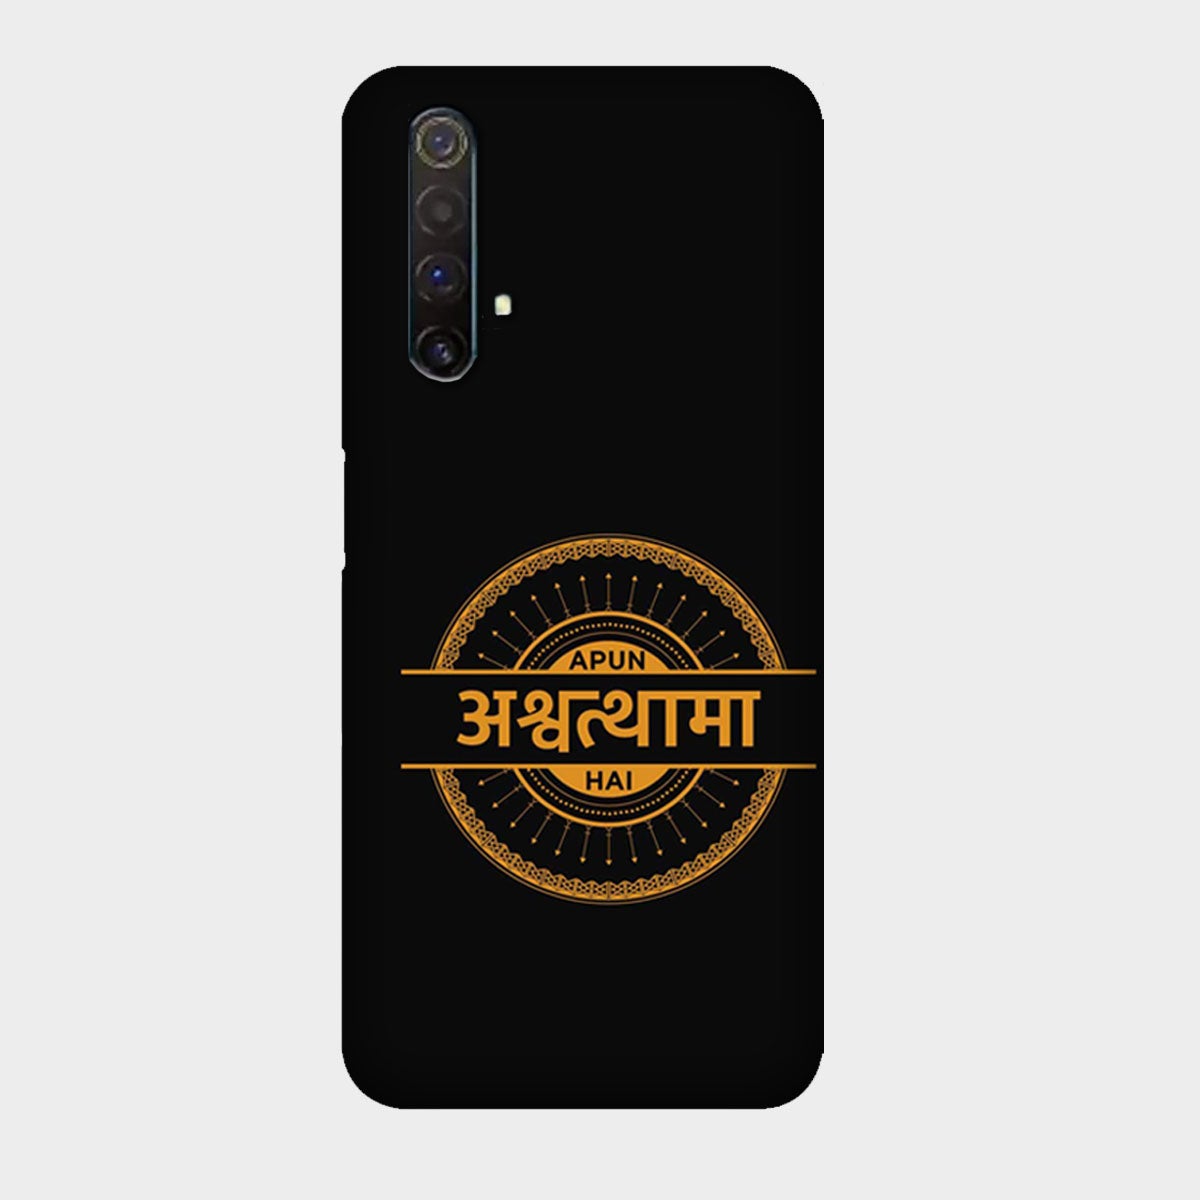 Apun Ashwathama Hai Sacred Games - Mobile Phone Cover - Hard Case